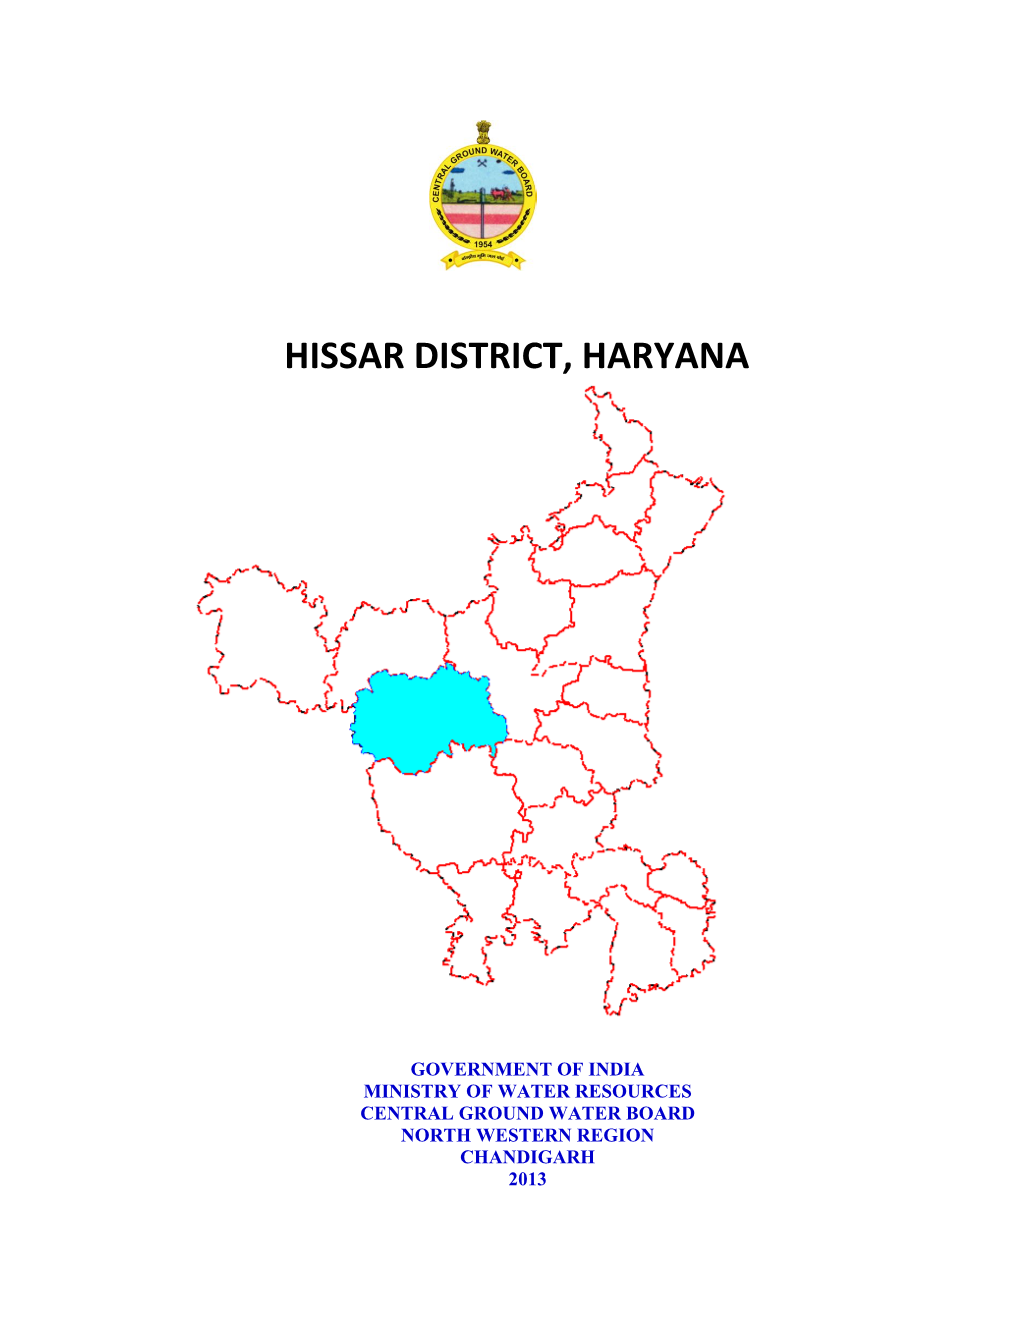 Hissar District, Haryana